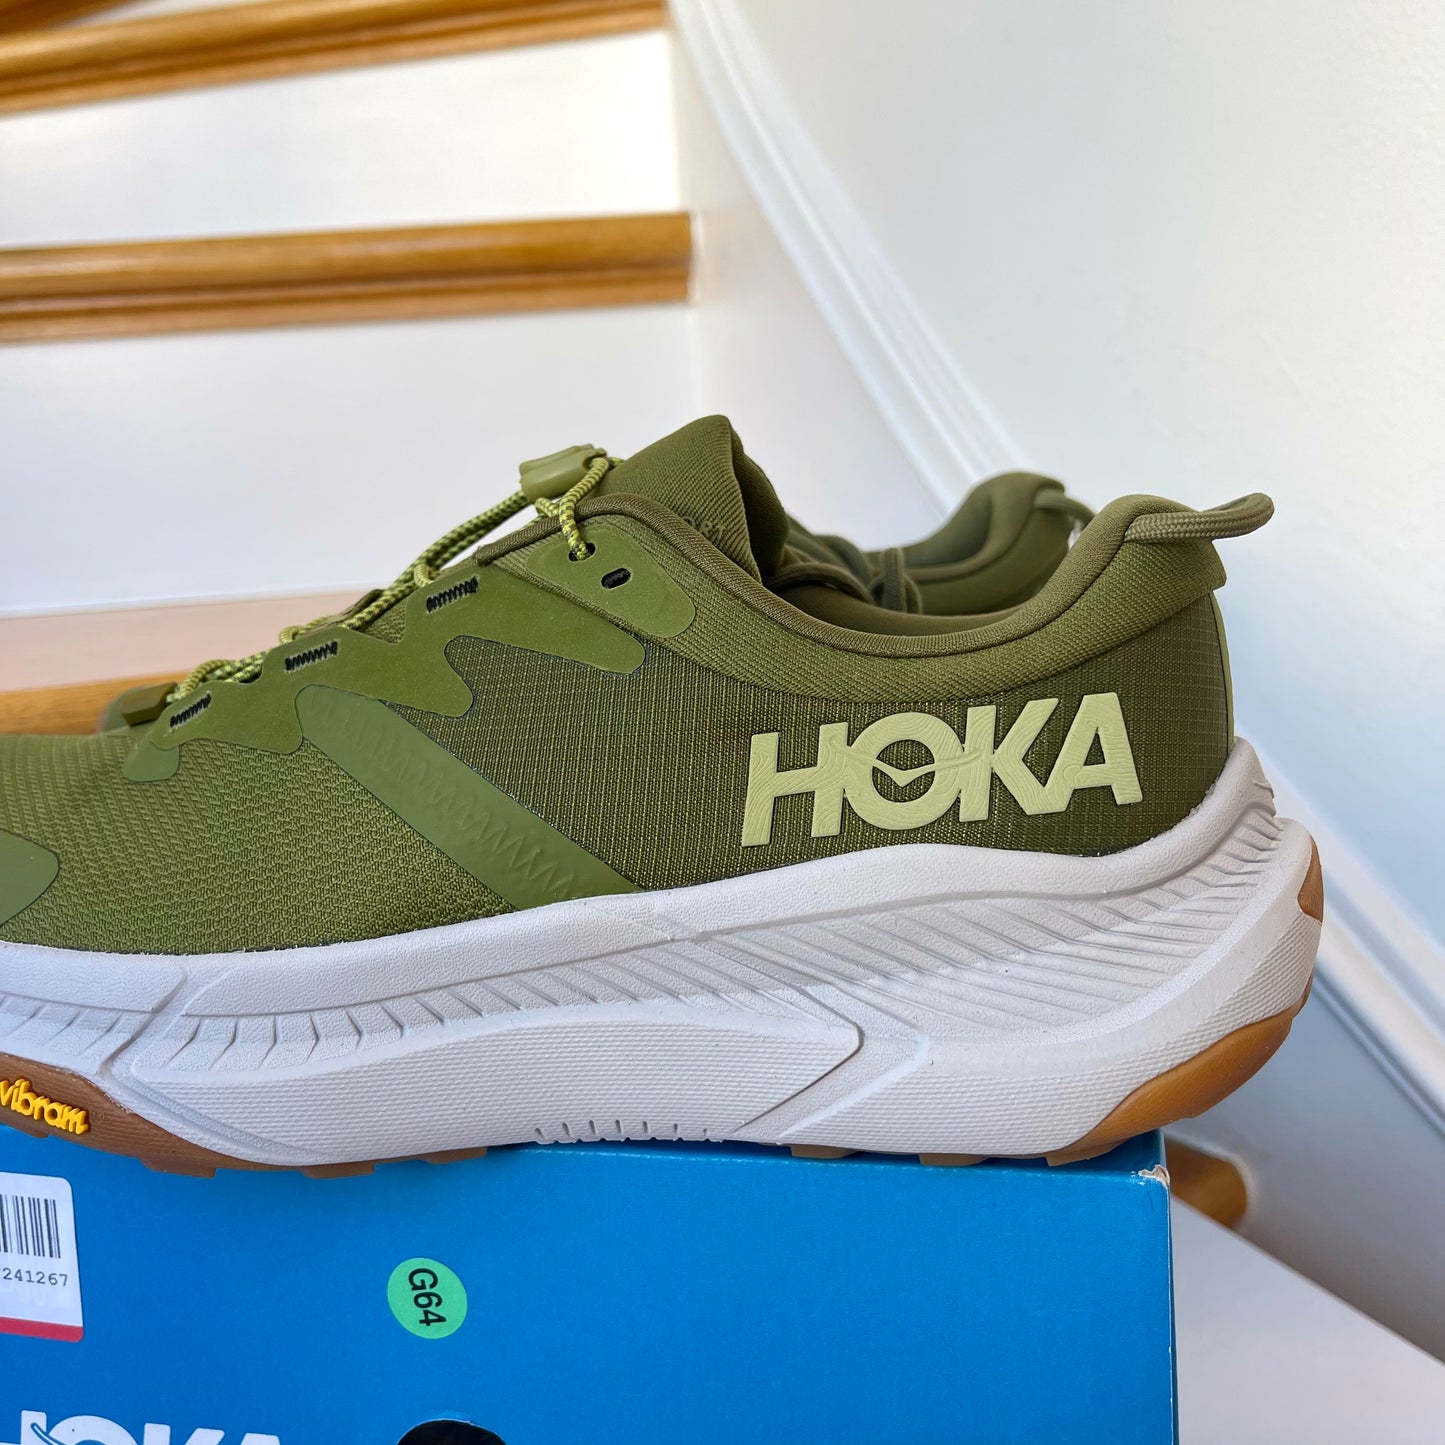 Hoka Transport in Avocado / Harbor Mist Green / Grey Athletic Hiking Shoes